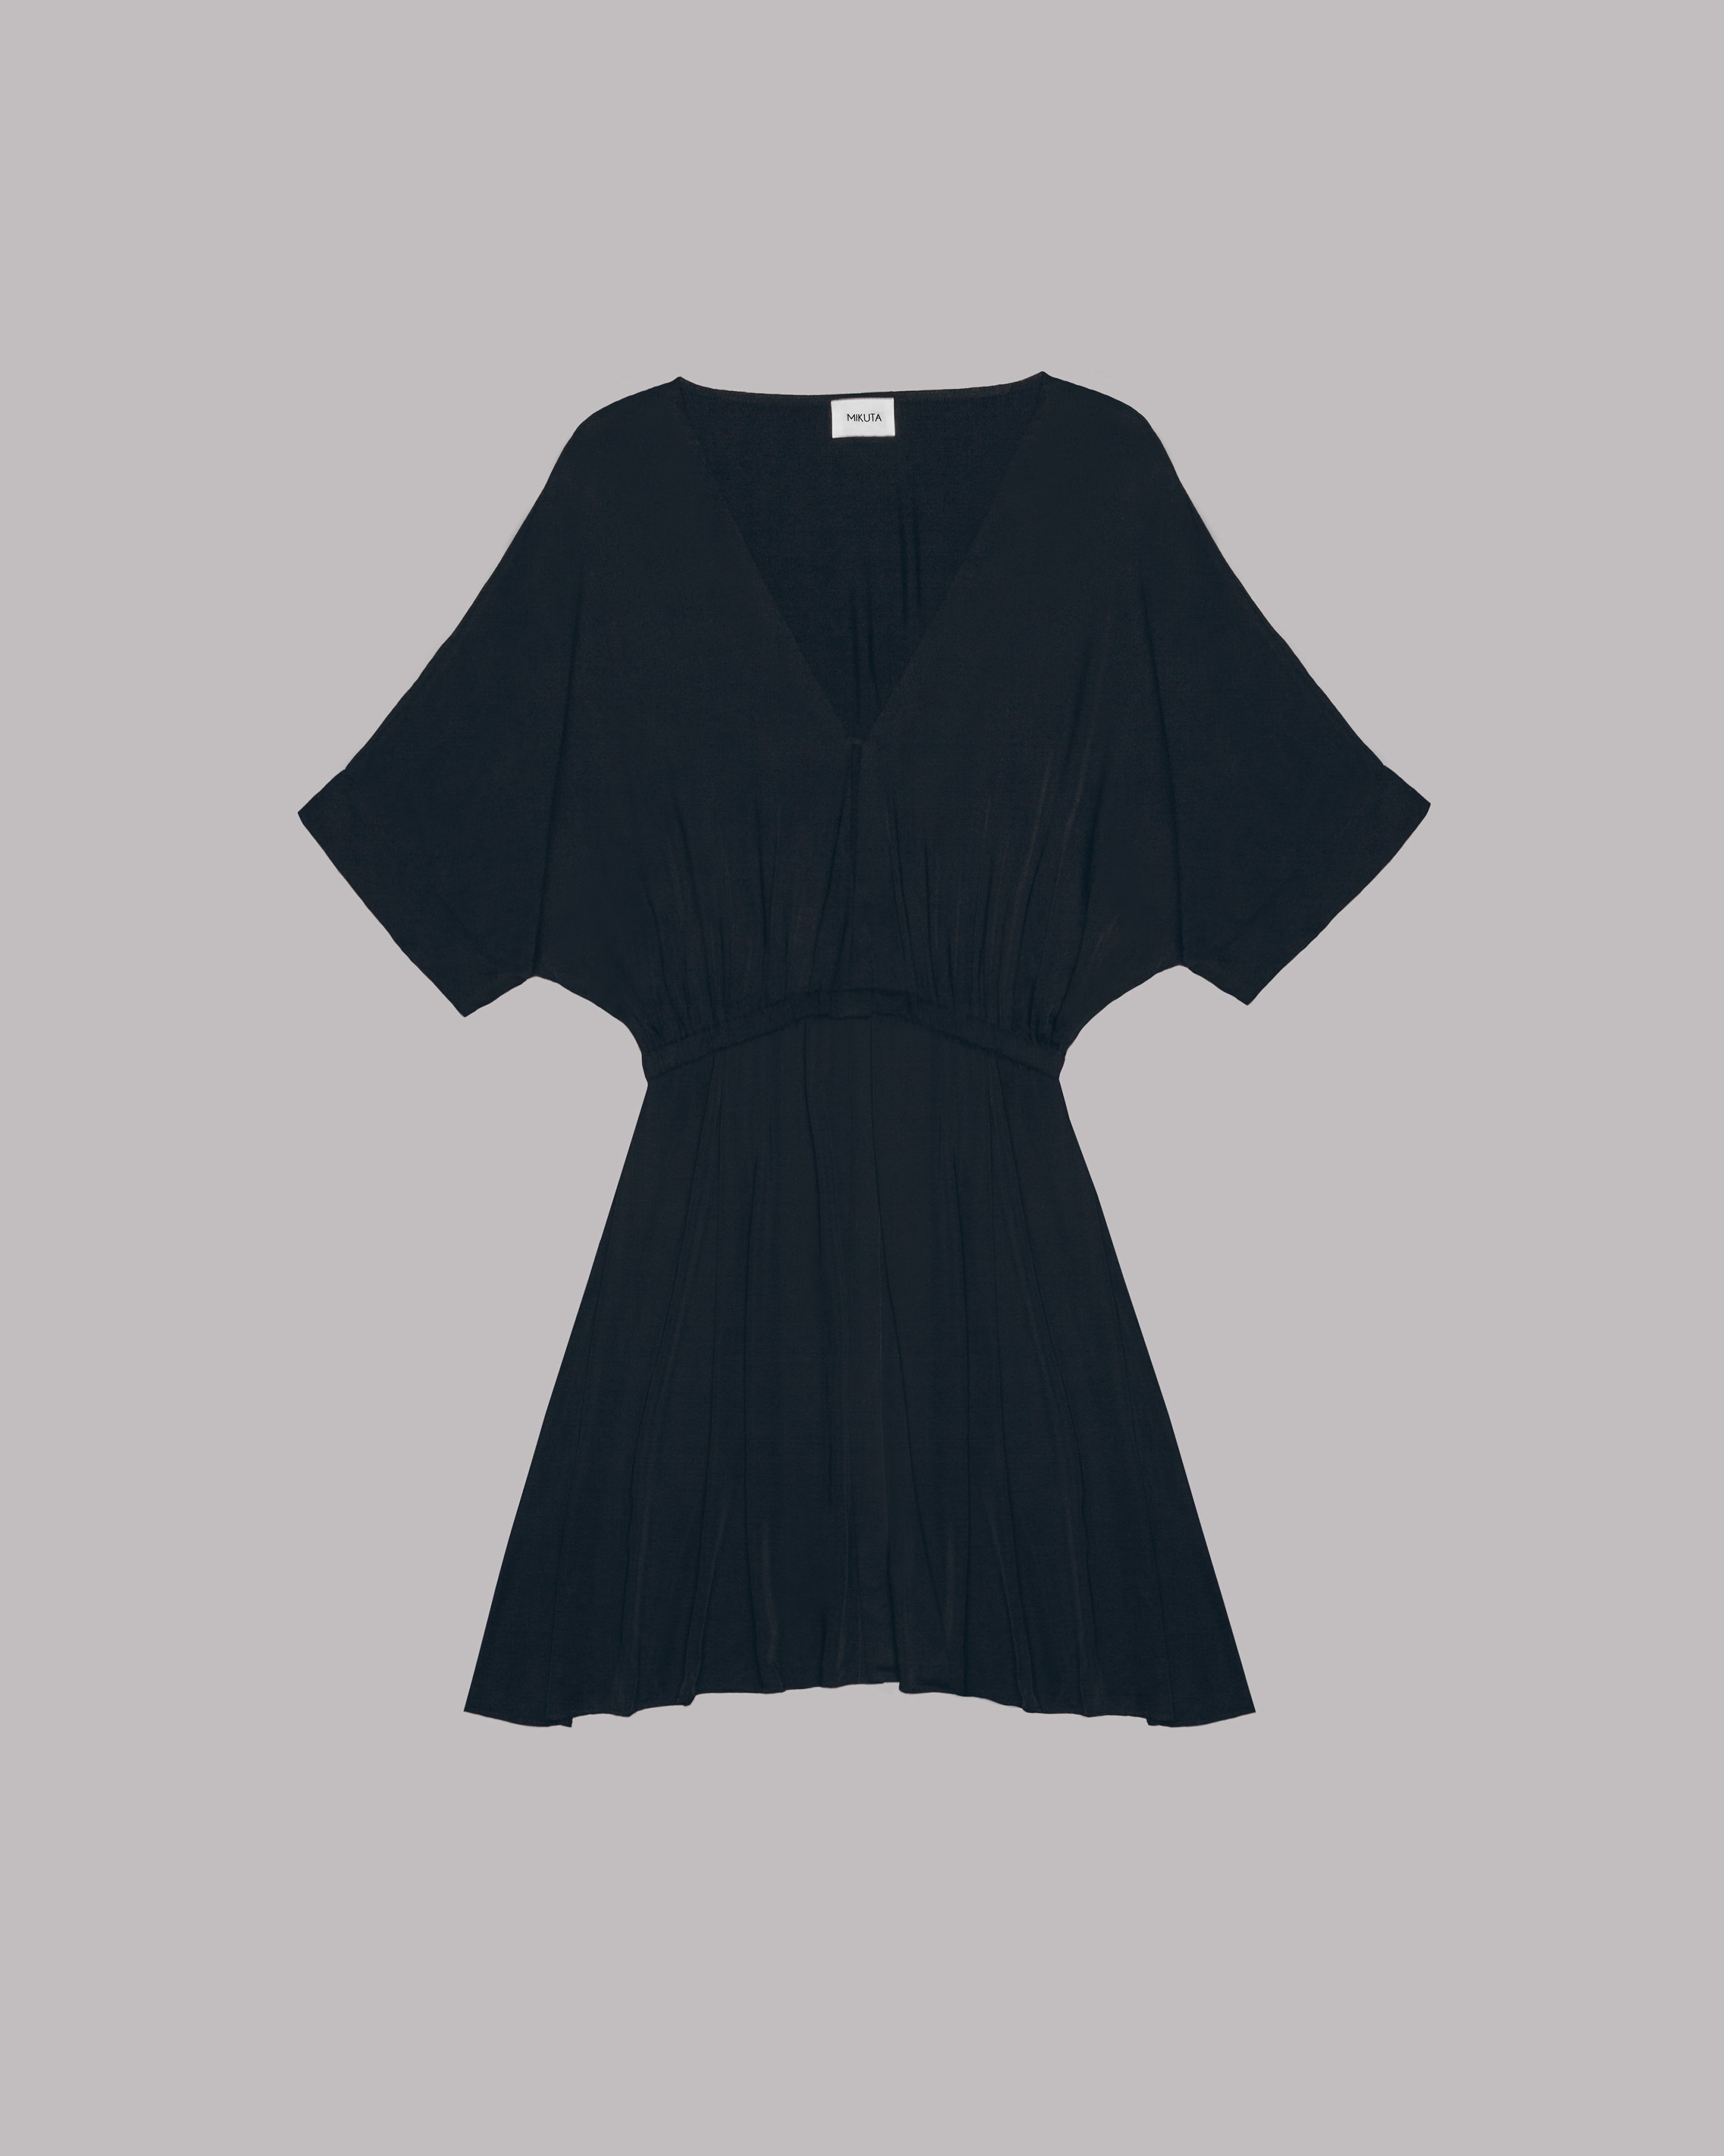 The Black Short Chill Dress